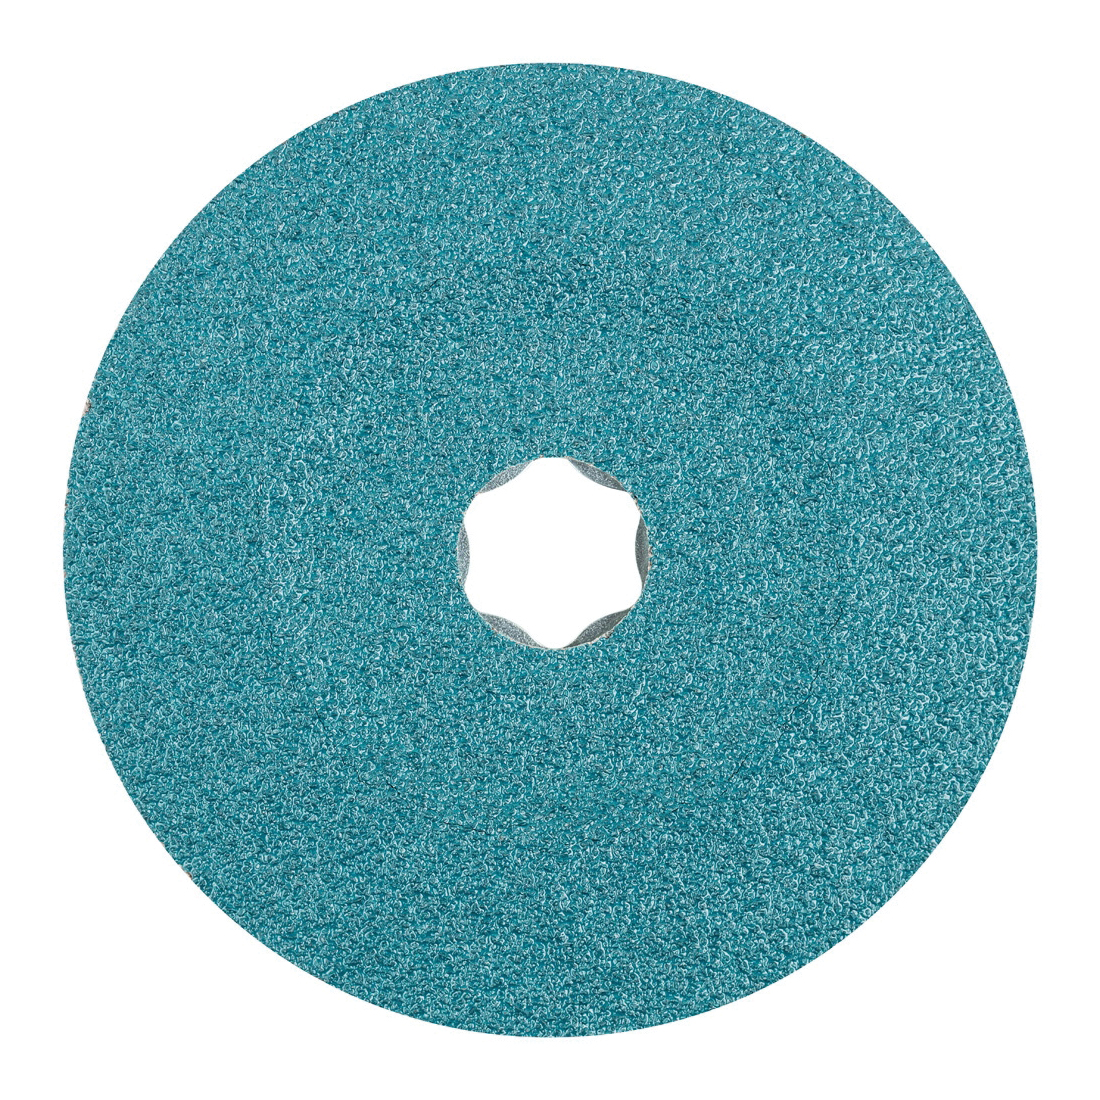 PFERD COMBICLICK® 40132 Coated Abrasive Disc, 4-1/2 in Dia, 50 Grit, Zirconia Alumina Abrasive